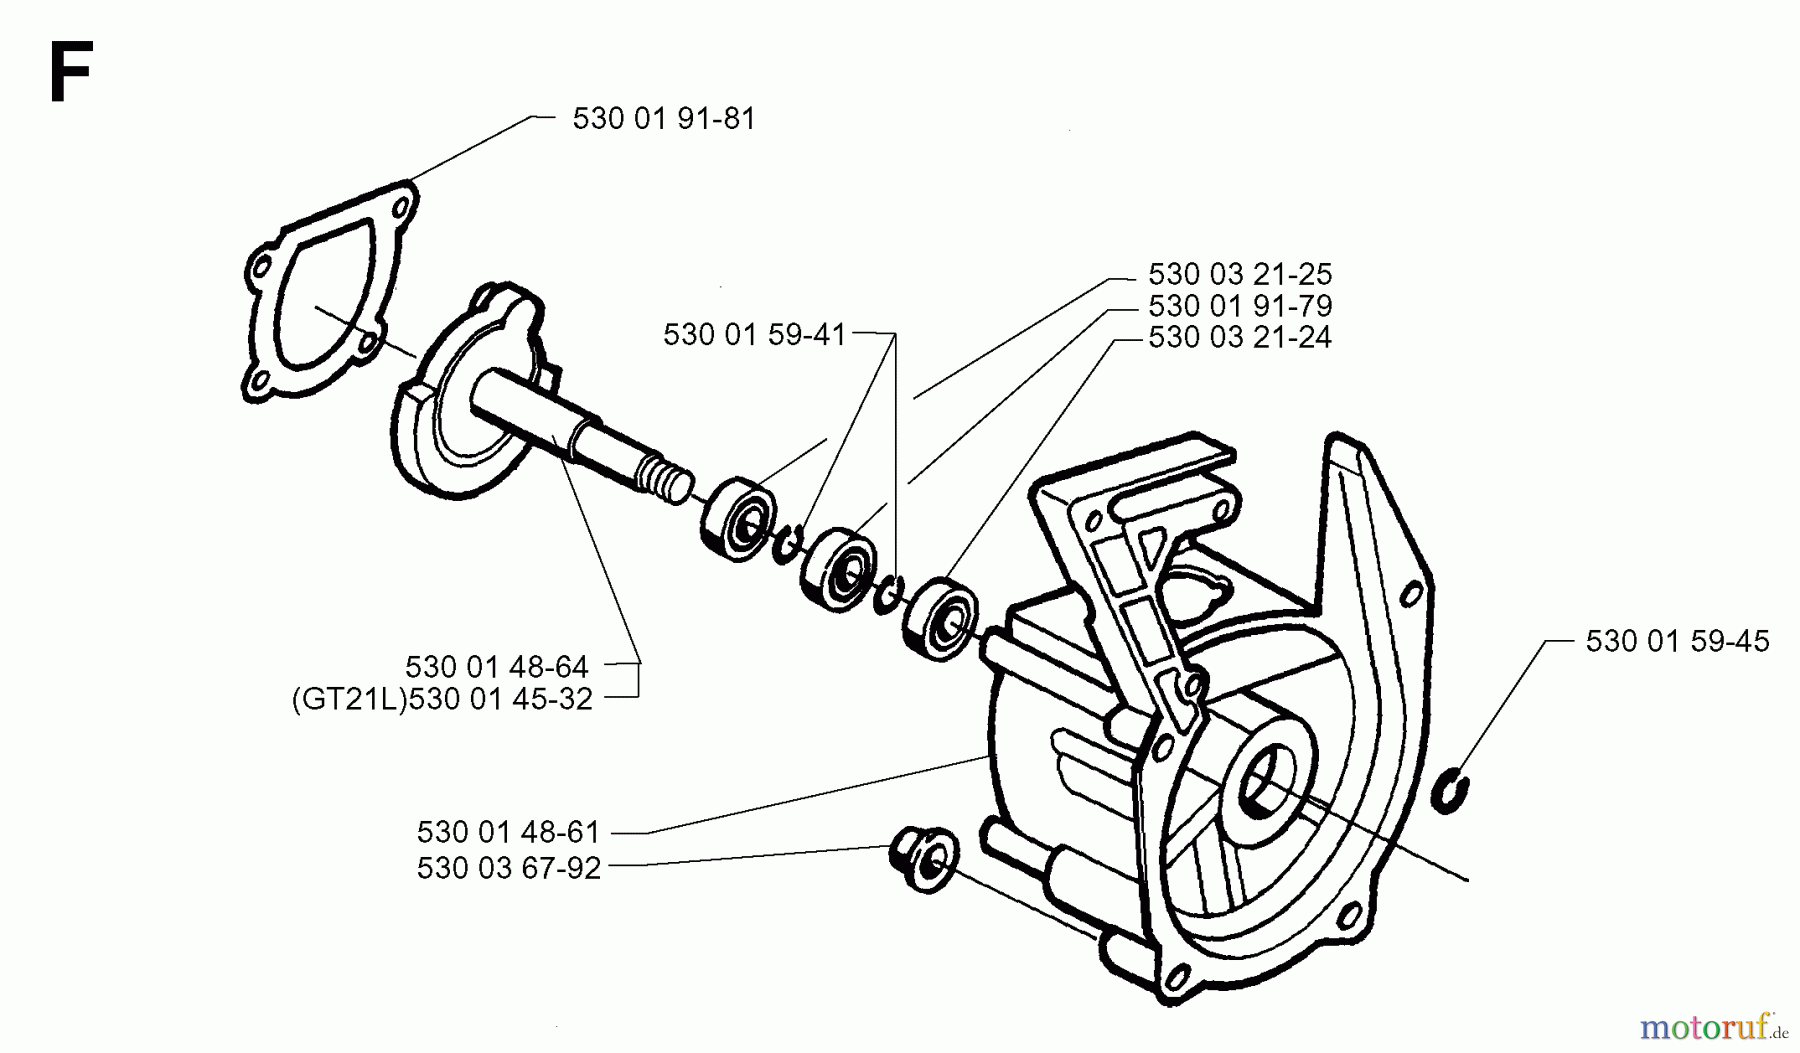  Jonsered Motorsensen, Trimmer GT21 - Jonsered String/Brush Trimmer (1997-05) CRANKCASE #2